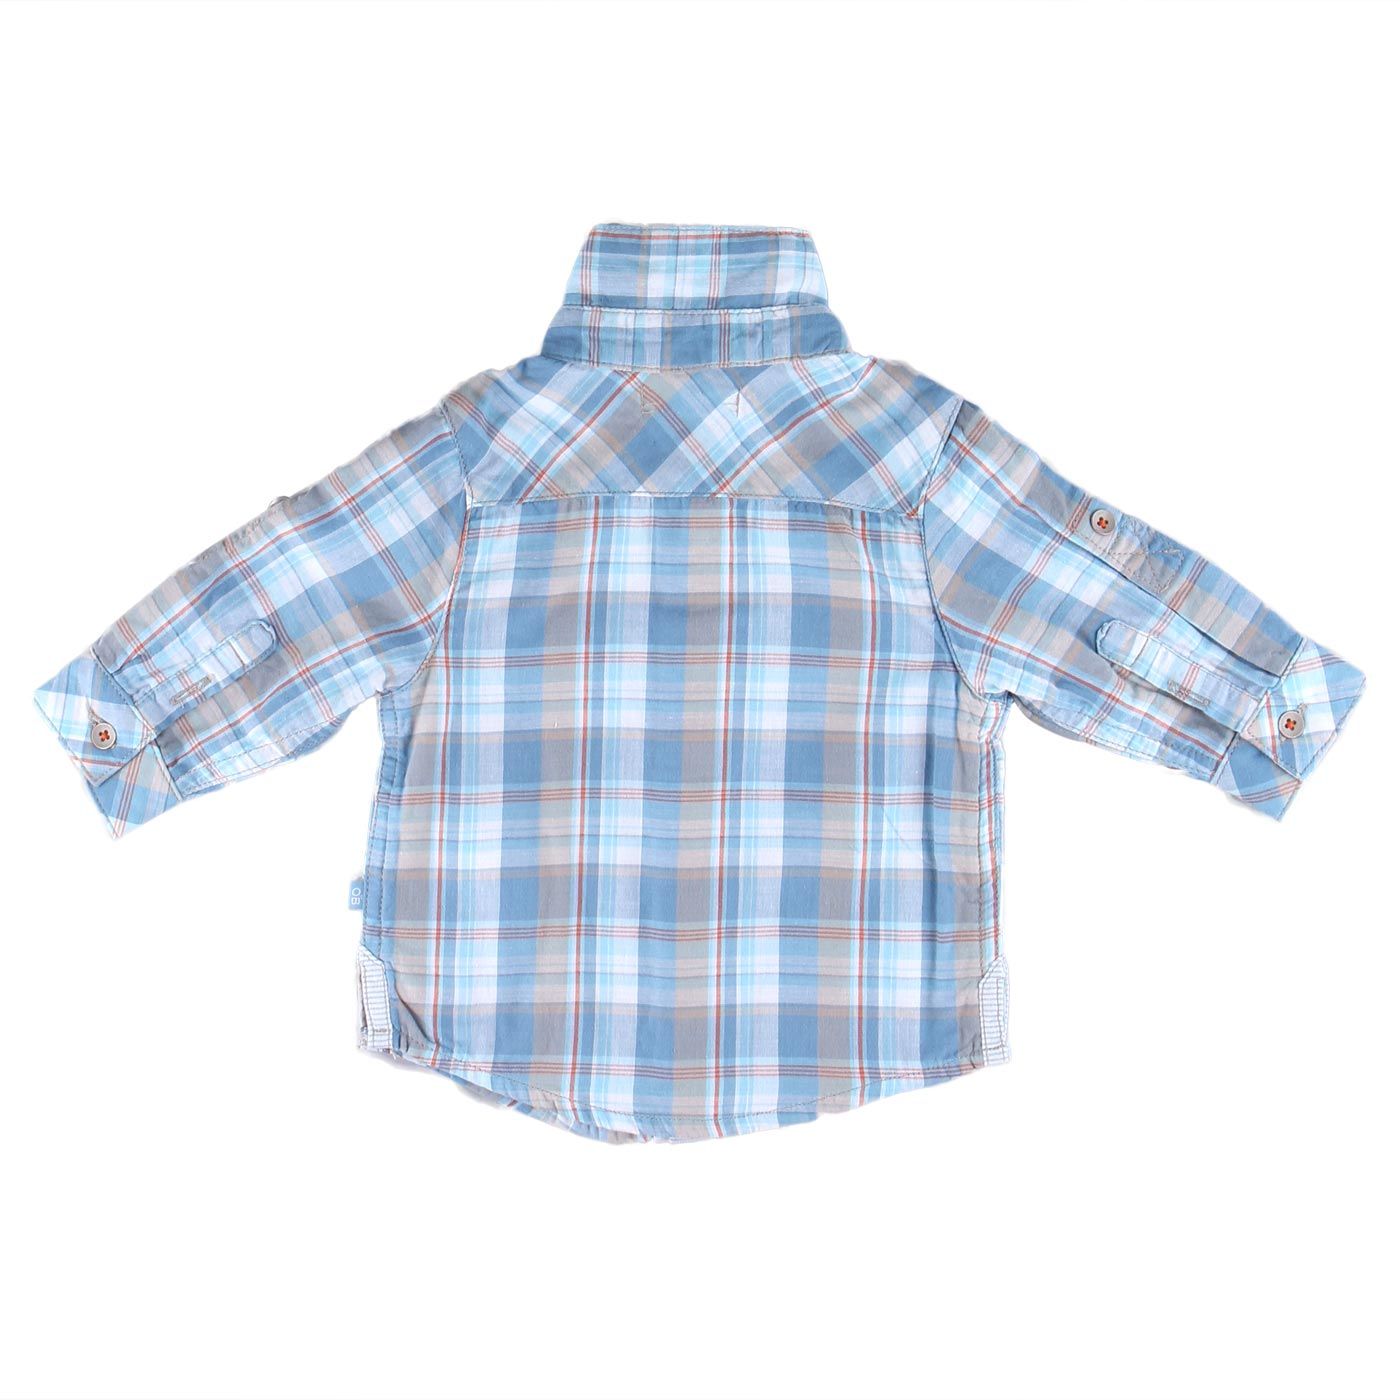 Kiddiewear Shirt Plaid Blue Gray-3M - 2